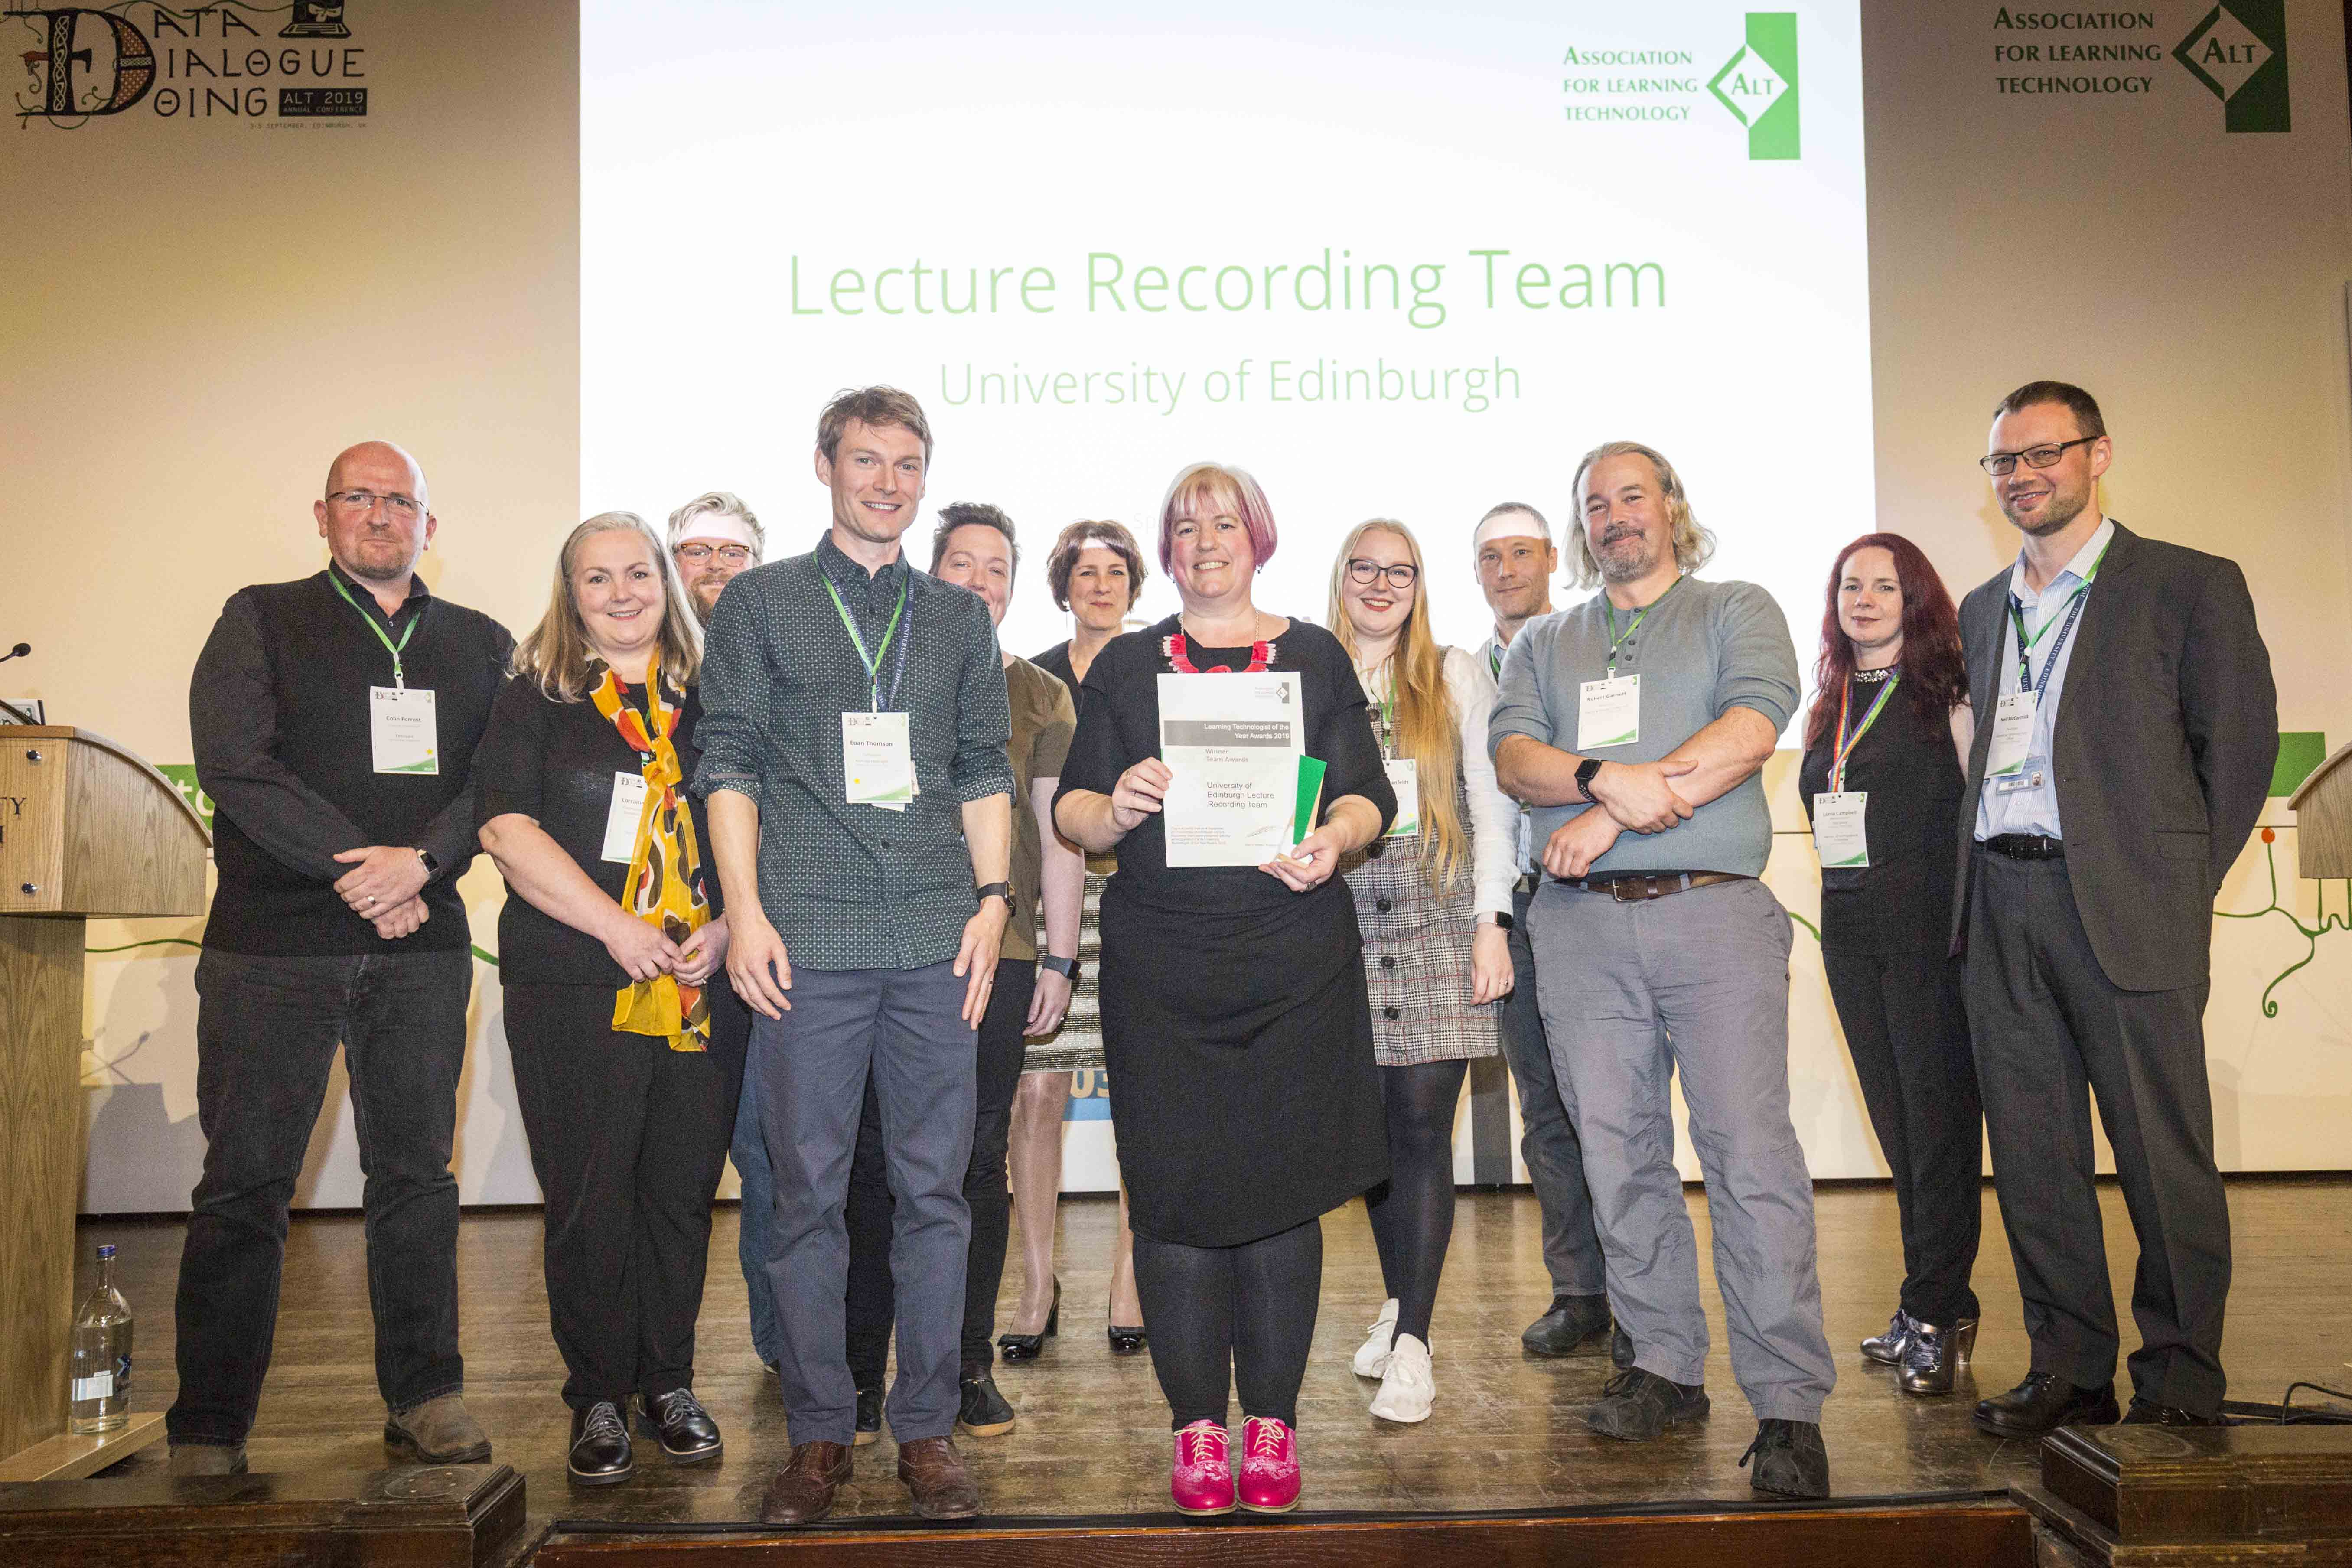 The Lecture Recording Team, University of Edinburgh